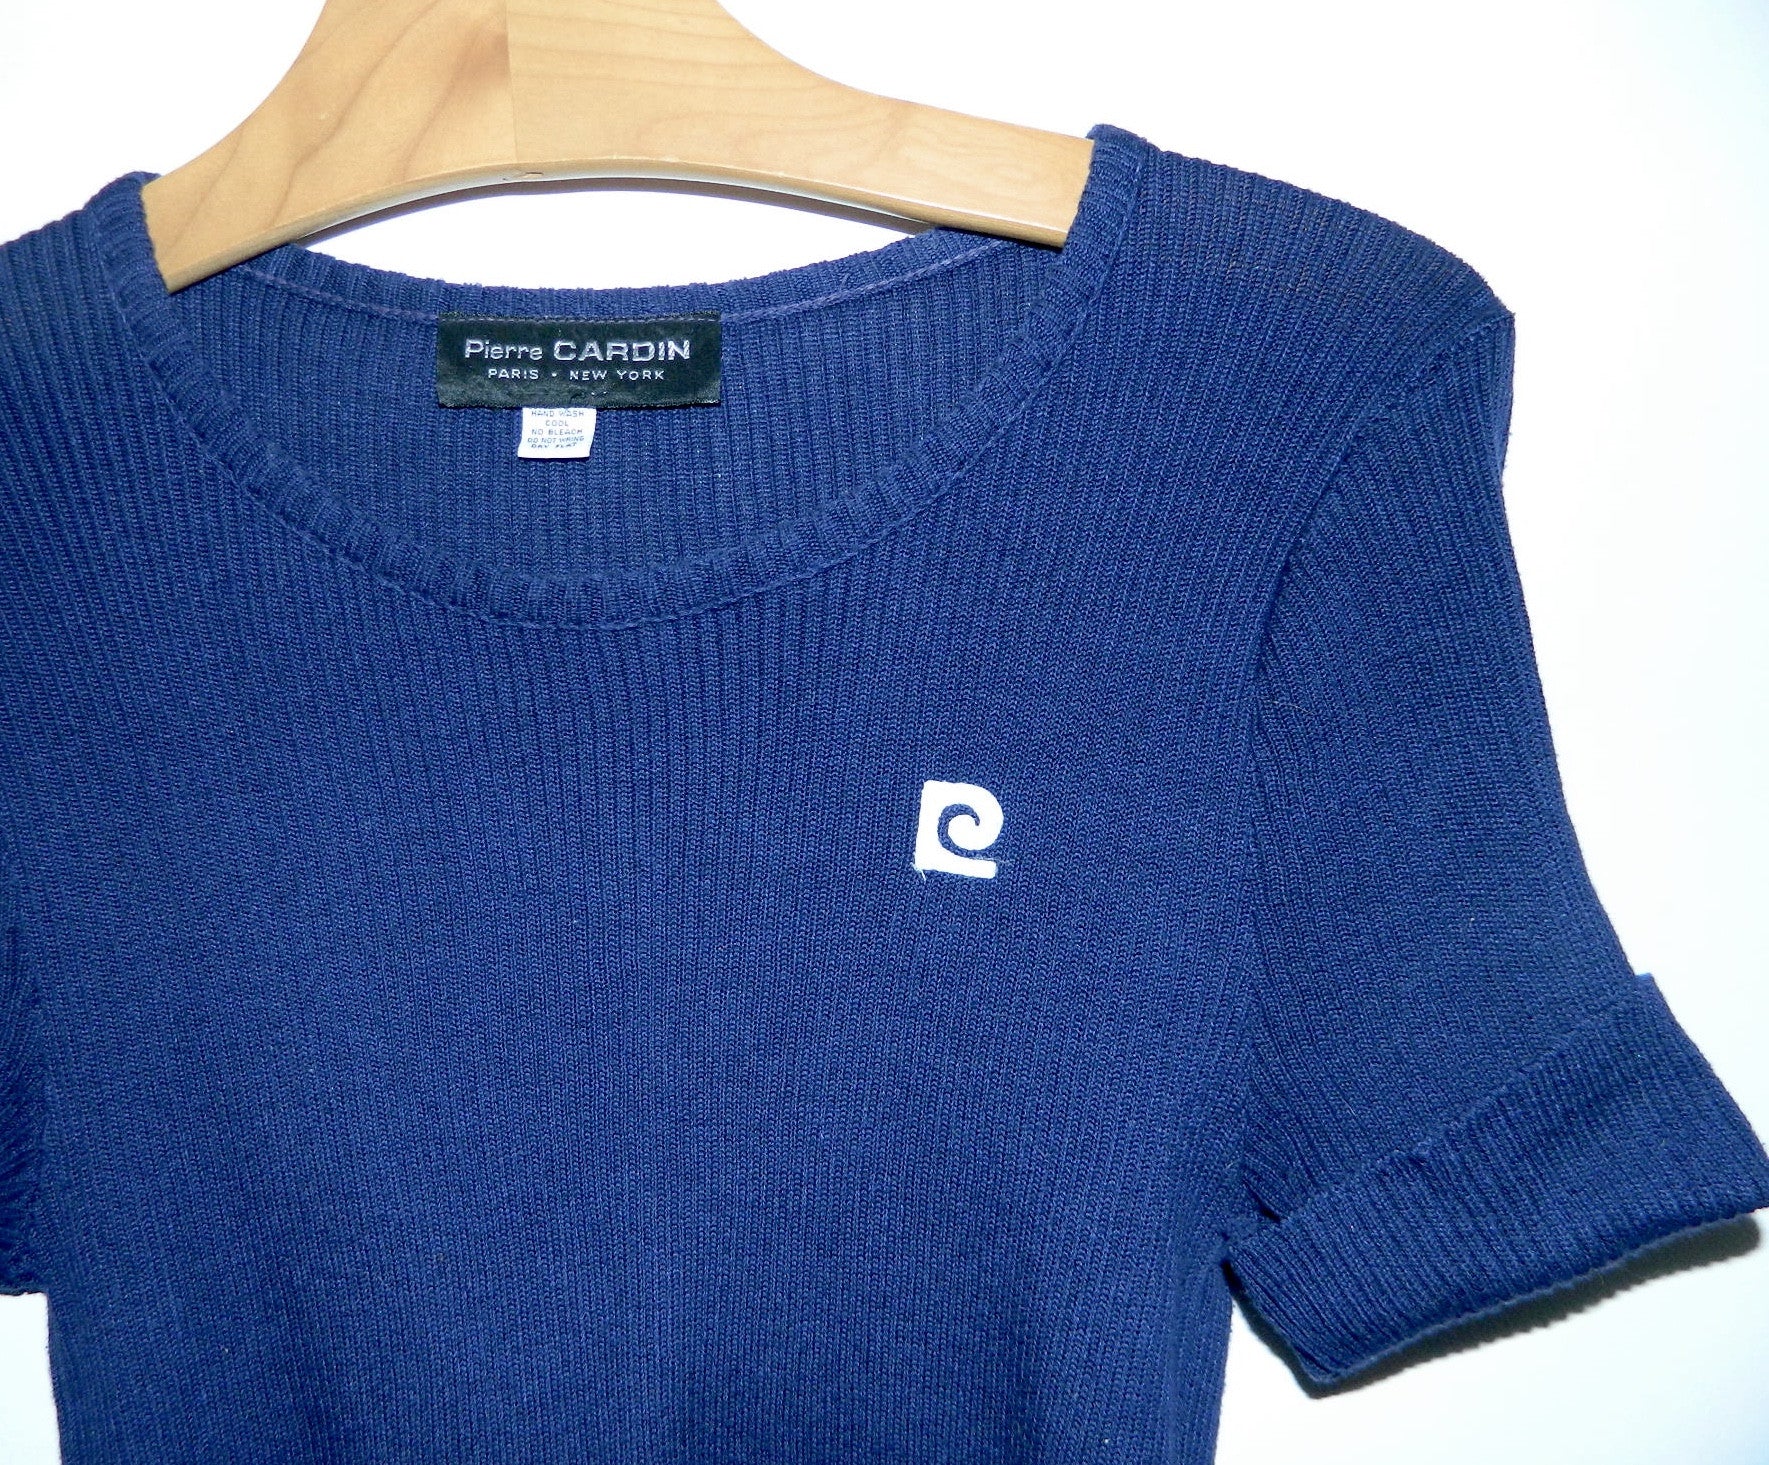 MOD blue Pierre Cardin logo top vintage 60s / 70s poorboy rib knit t shirt OSFM